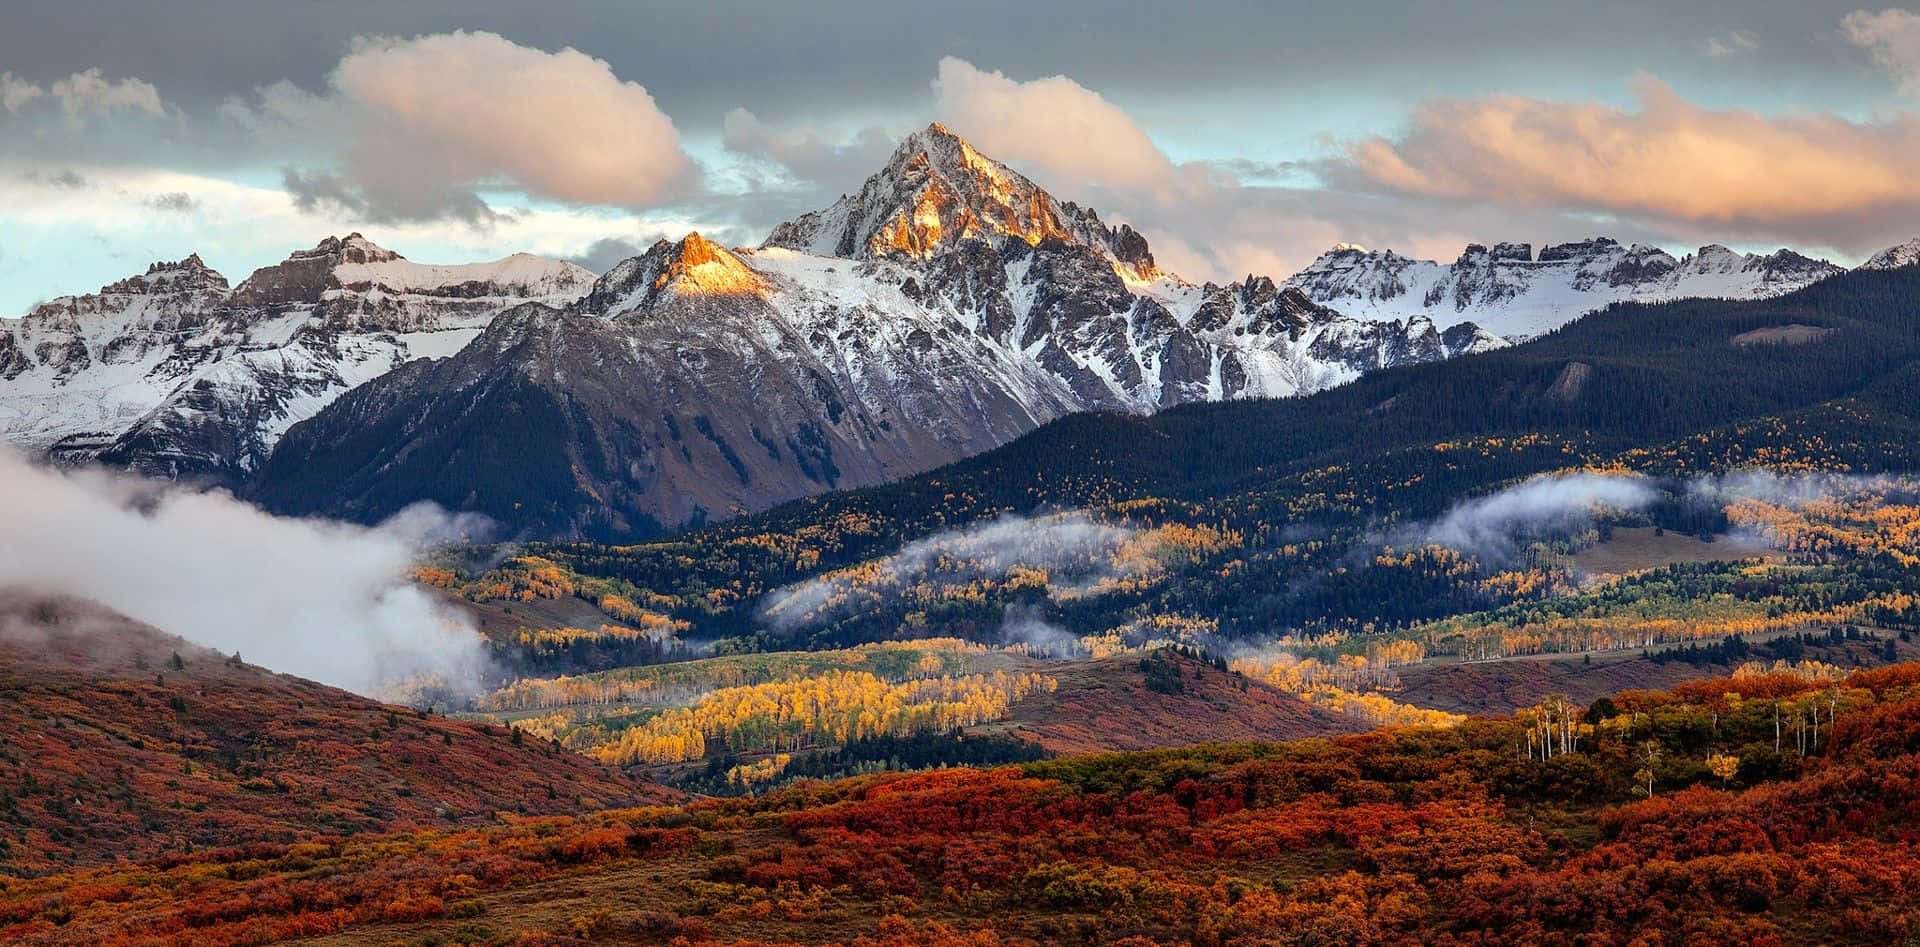 Enjoy the majestic beauty of Colorado mountains